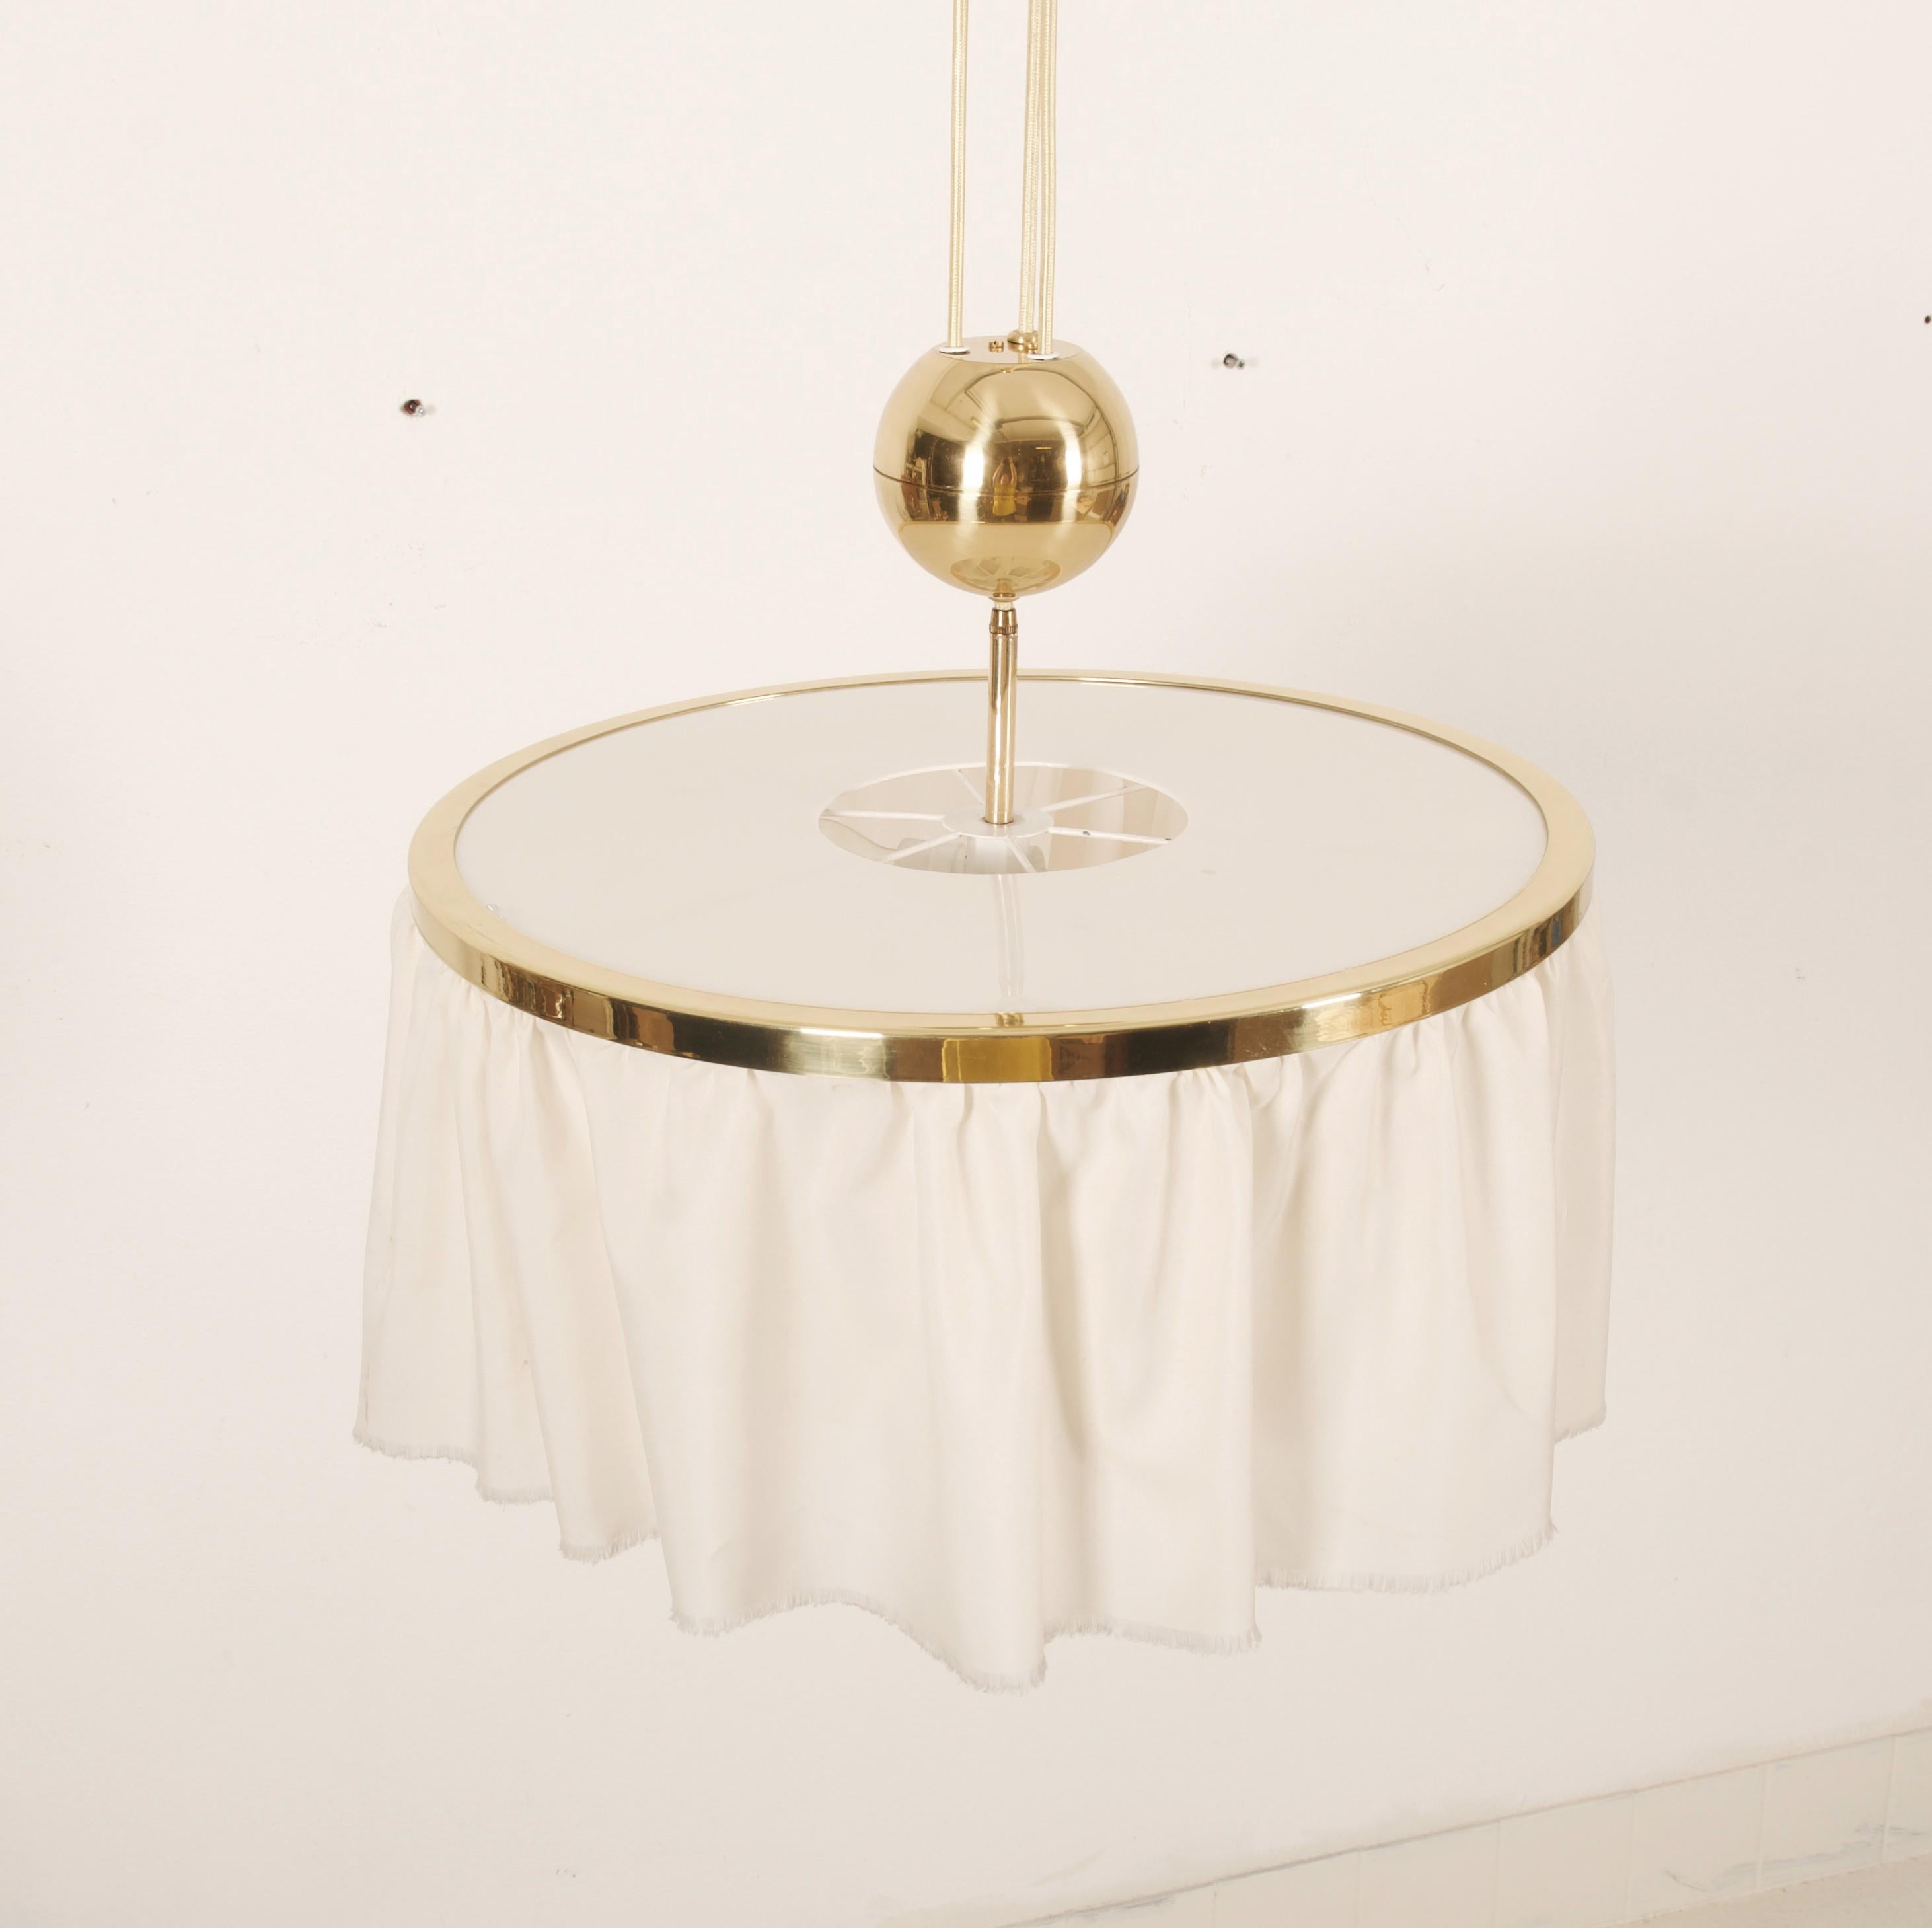 Austrian Counterweight Silk Pendant Light by J.T. Kalmar Designed by Adolf Loos